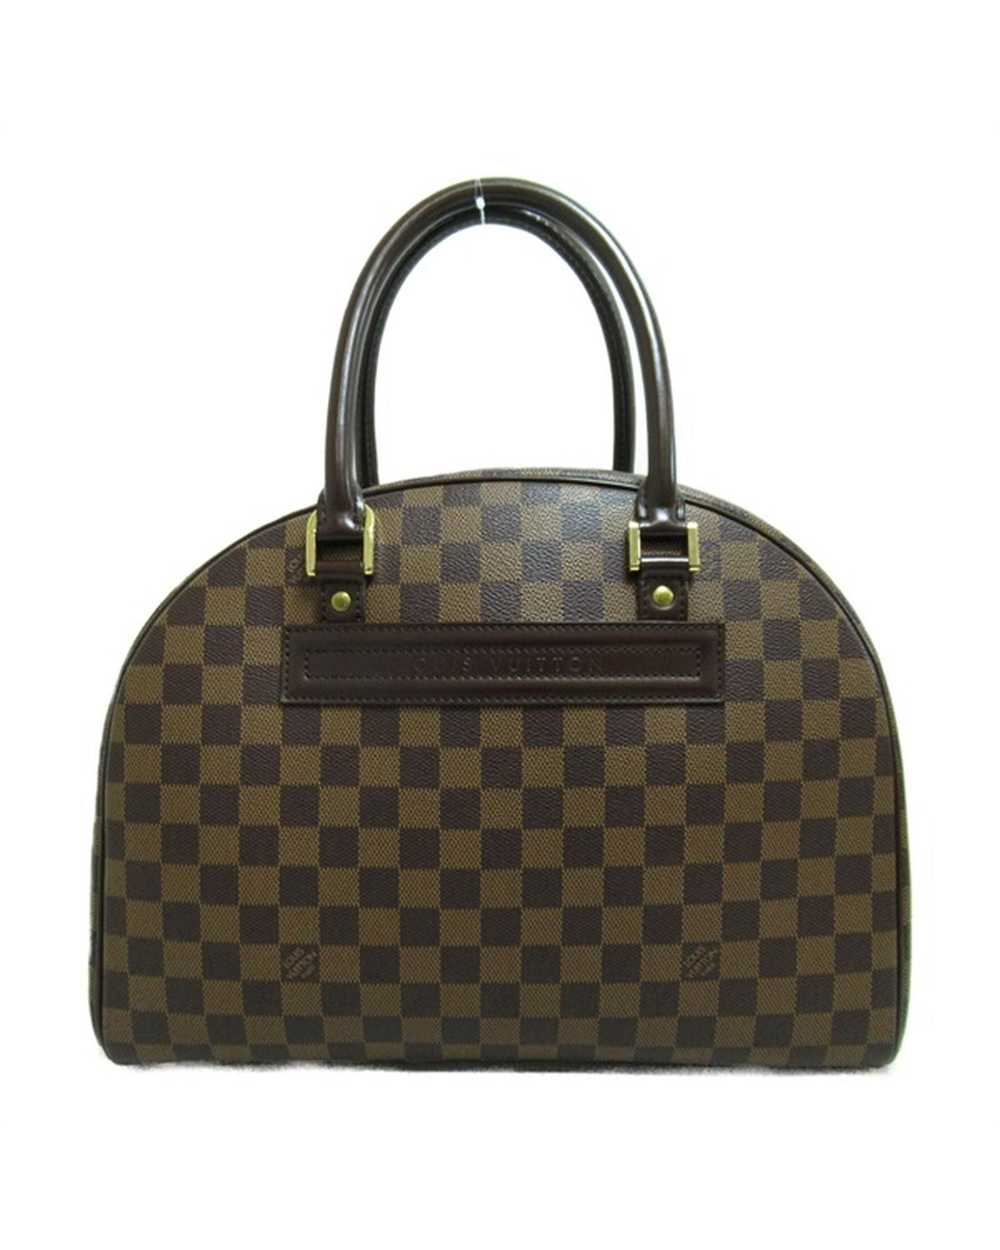 Louis Vuitton Designer Damier Ebene Bag in Excell… - image 1